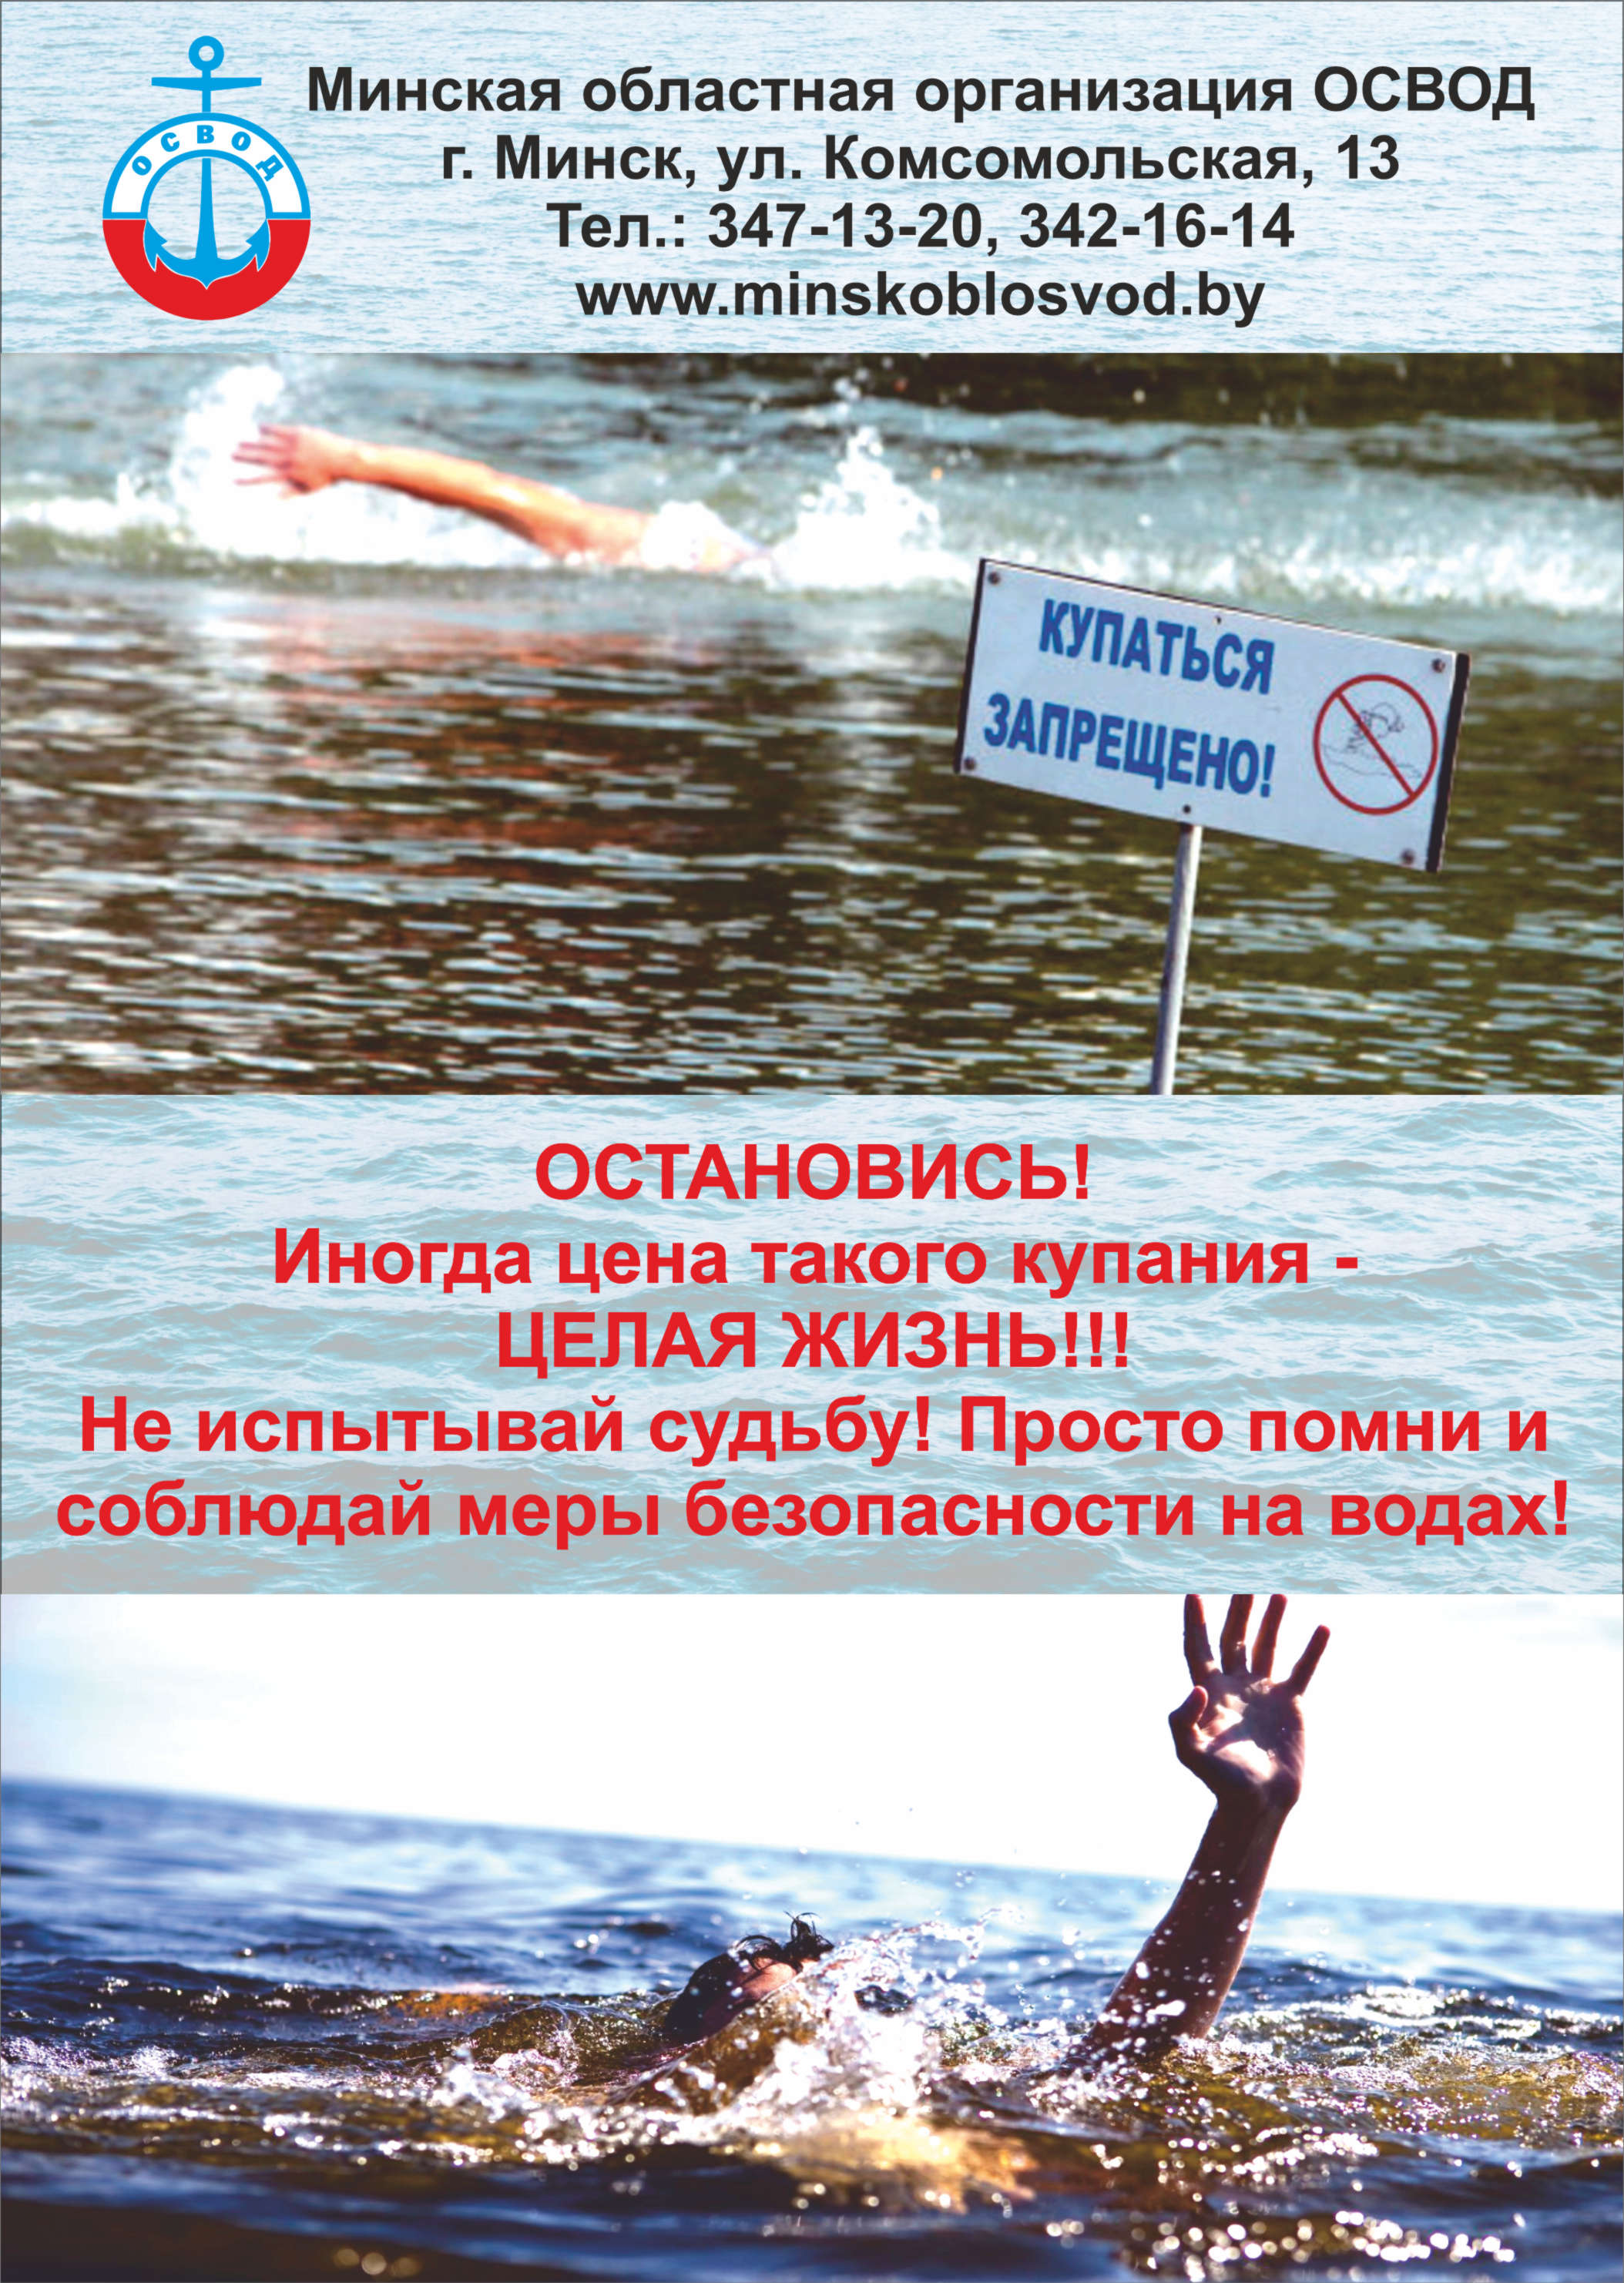 Освод_плакат_а4, лето 2020 - 2.jpg